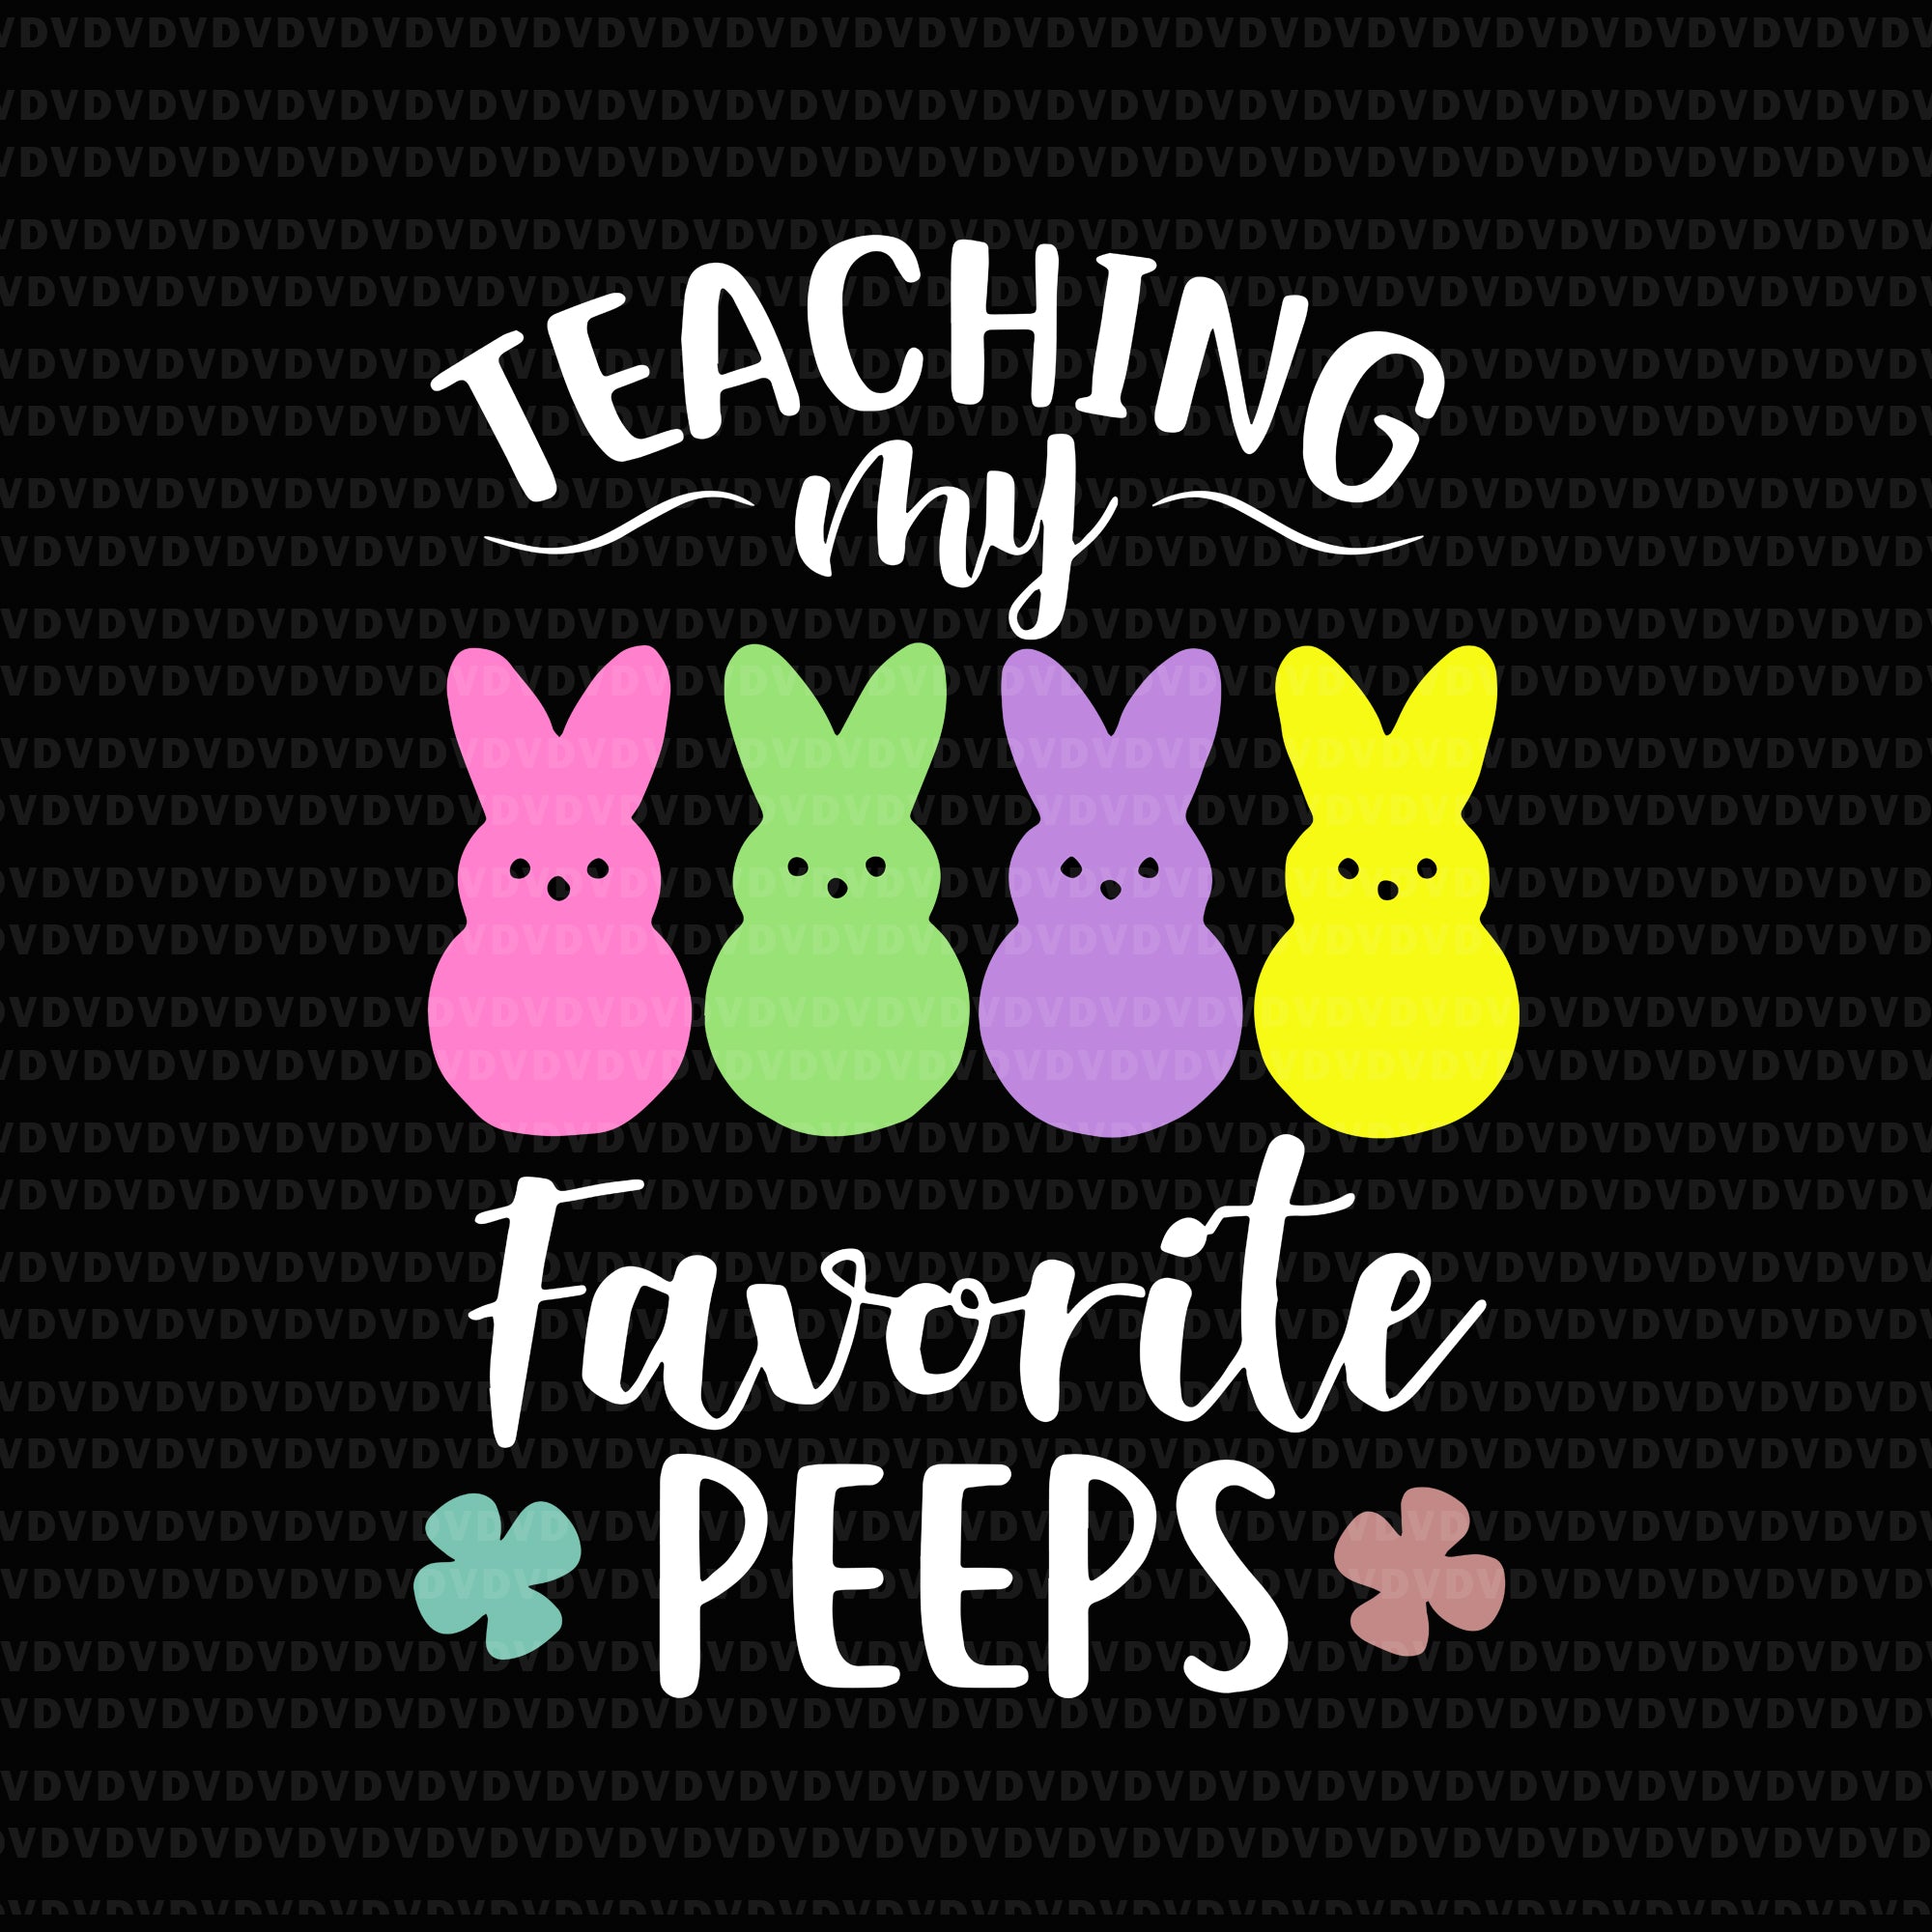 Teaching my favorite peeps easter bunny egg hunt svg, teaching my favorite peeps easter bunny egg hunt, teaching my favorite peeps